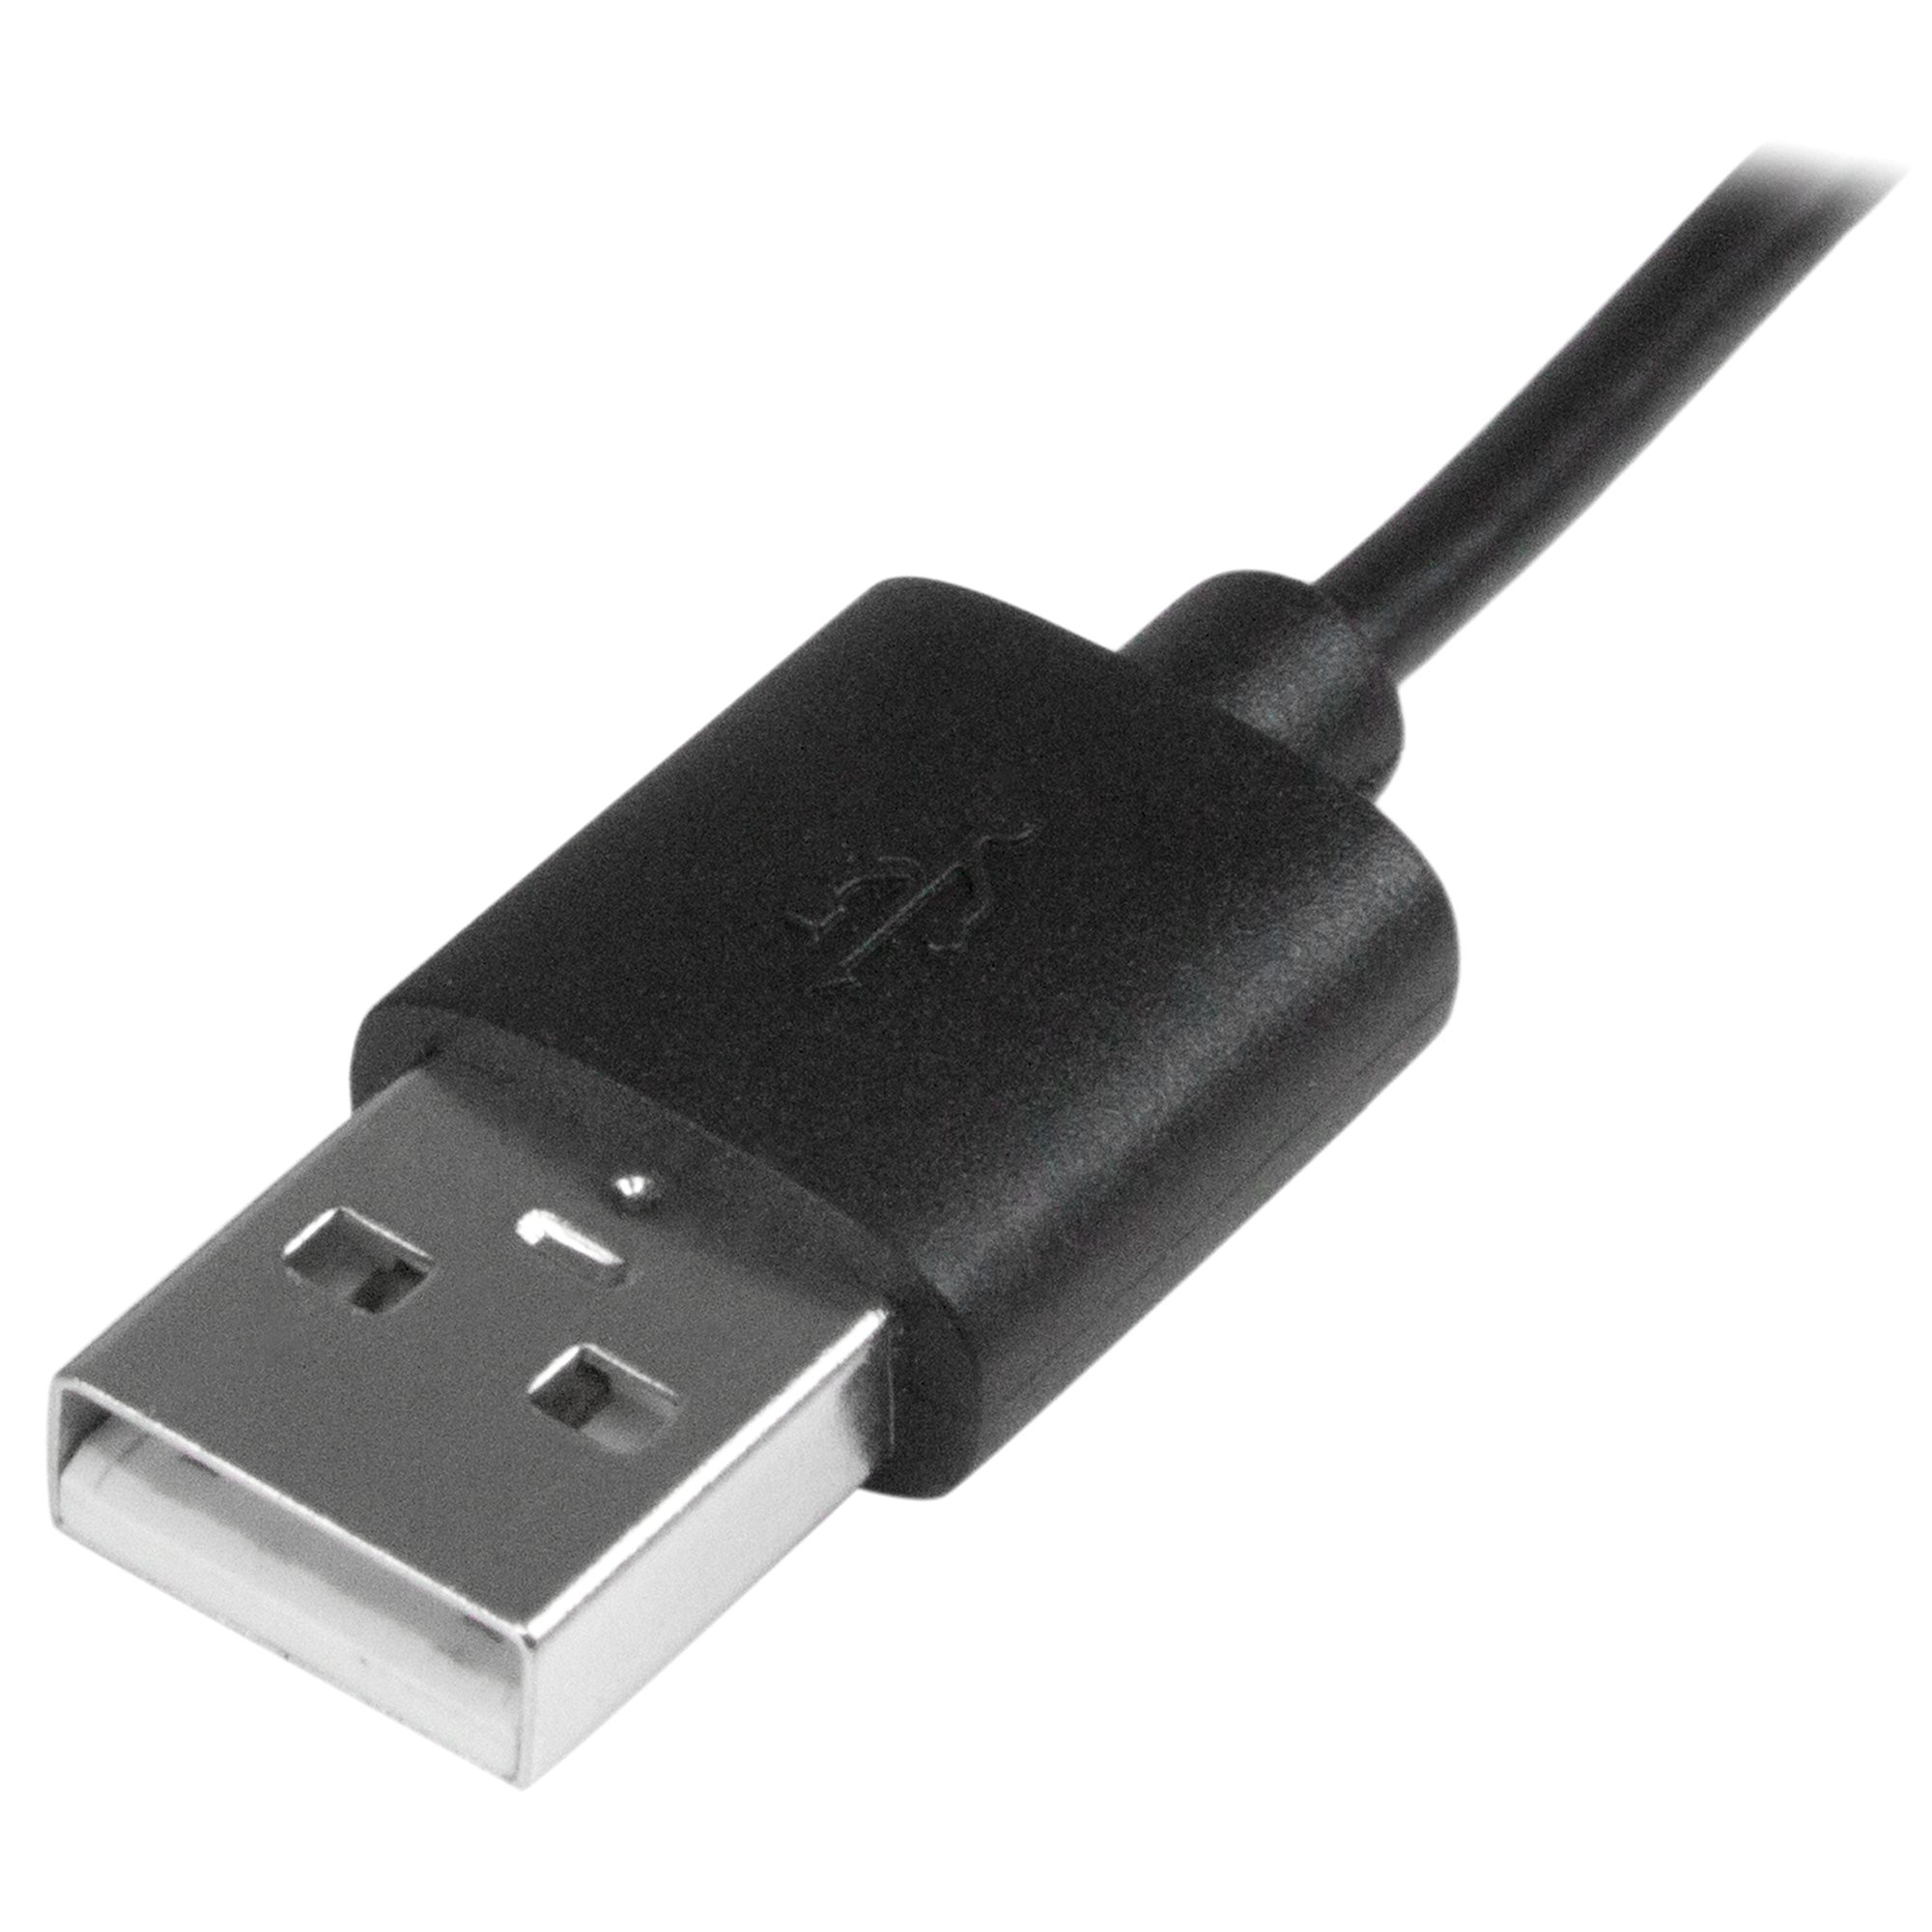 Cable USB a Micro USB con Interruptor On/Off indicador luz LED